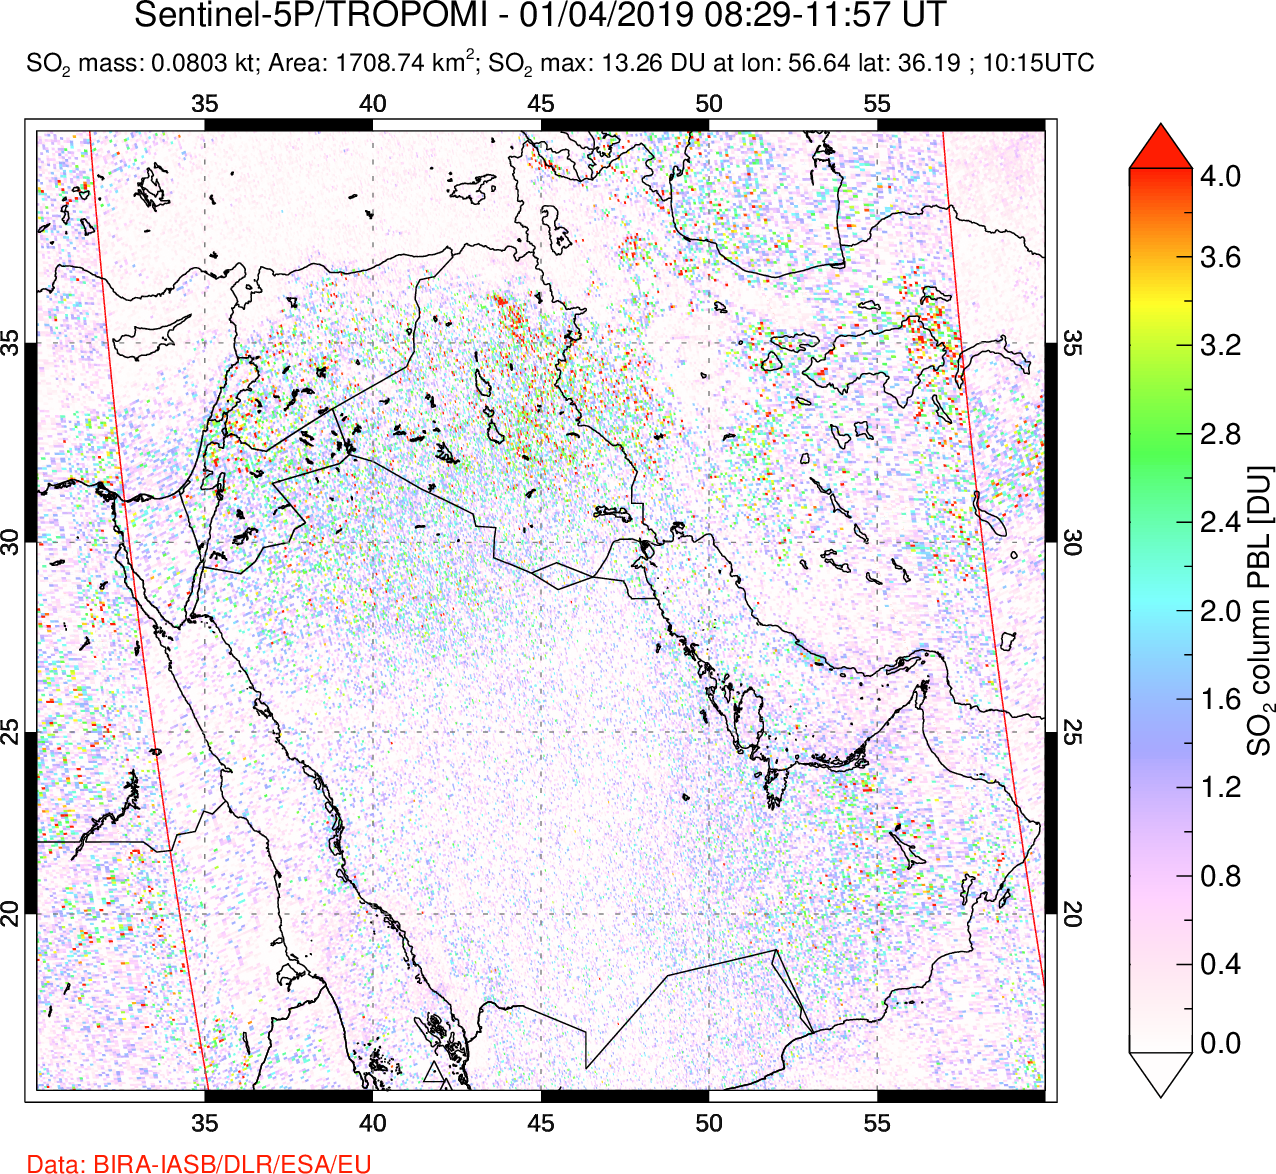 A sulfur dioxide image over Middle East on Jan 04, 2019.